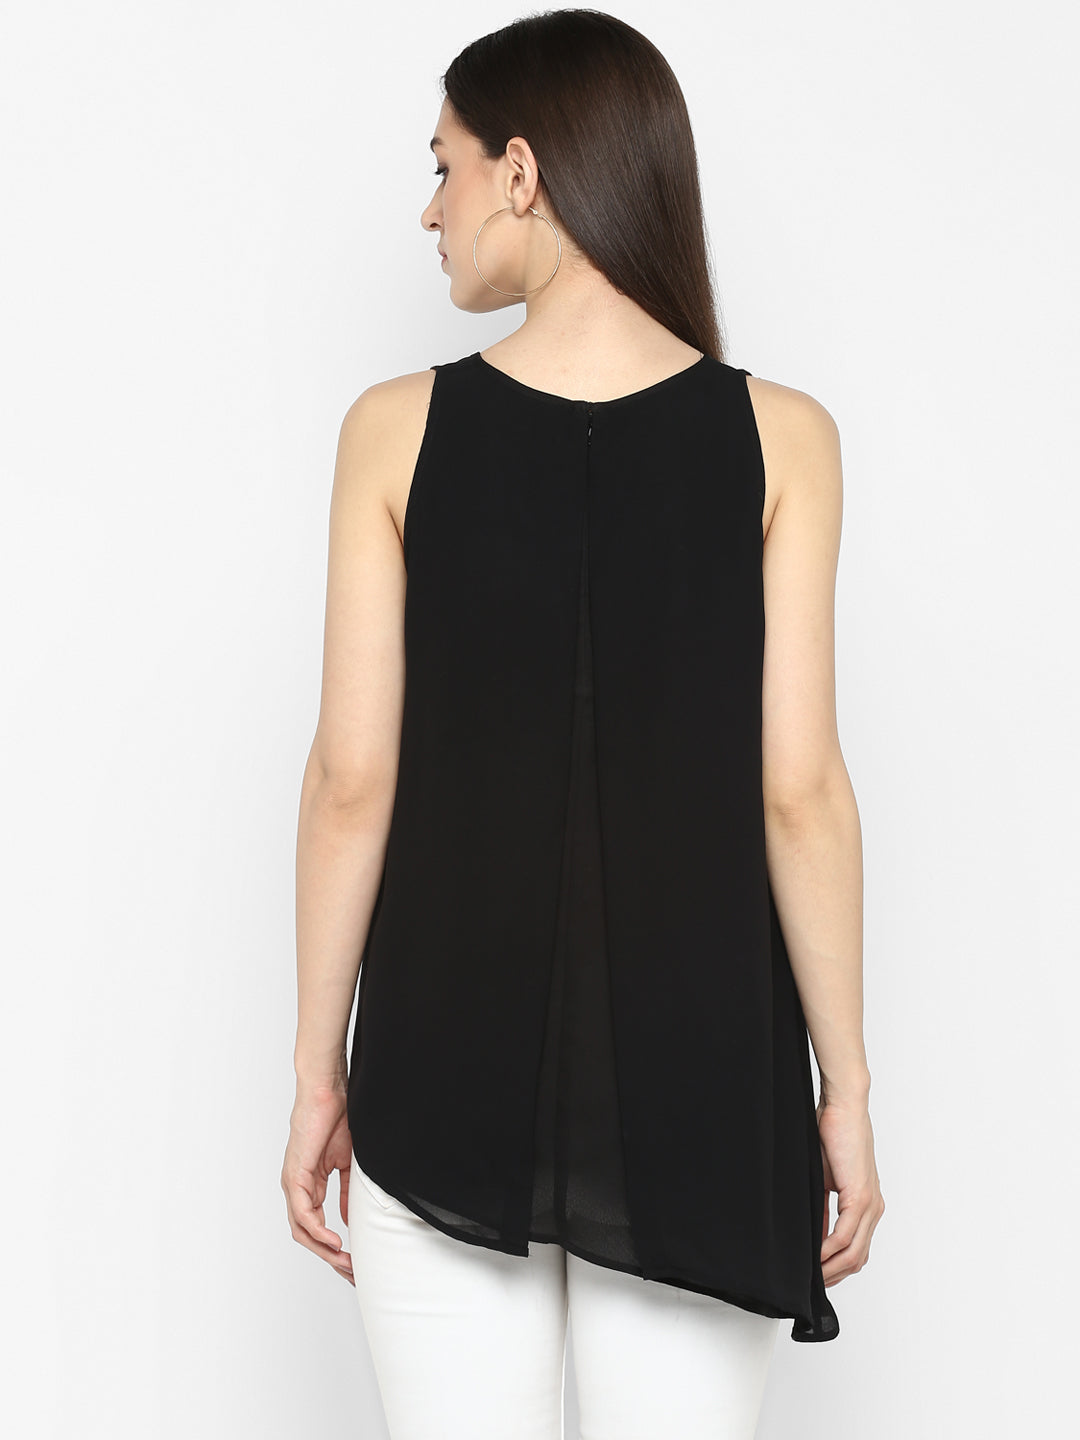 Black polyester sleeveless top